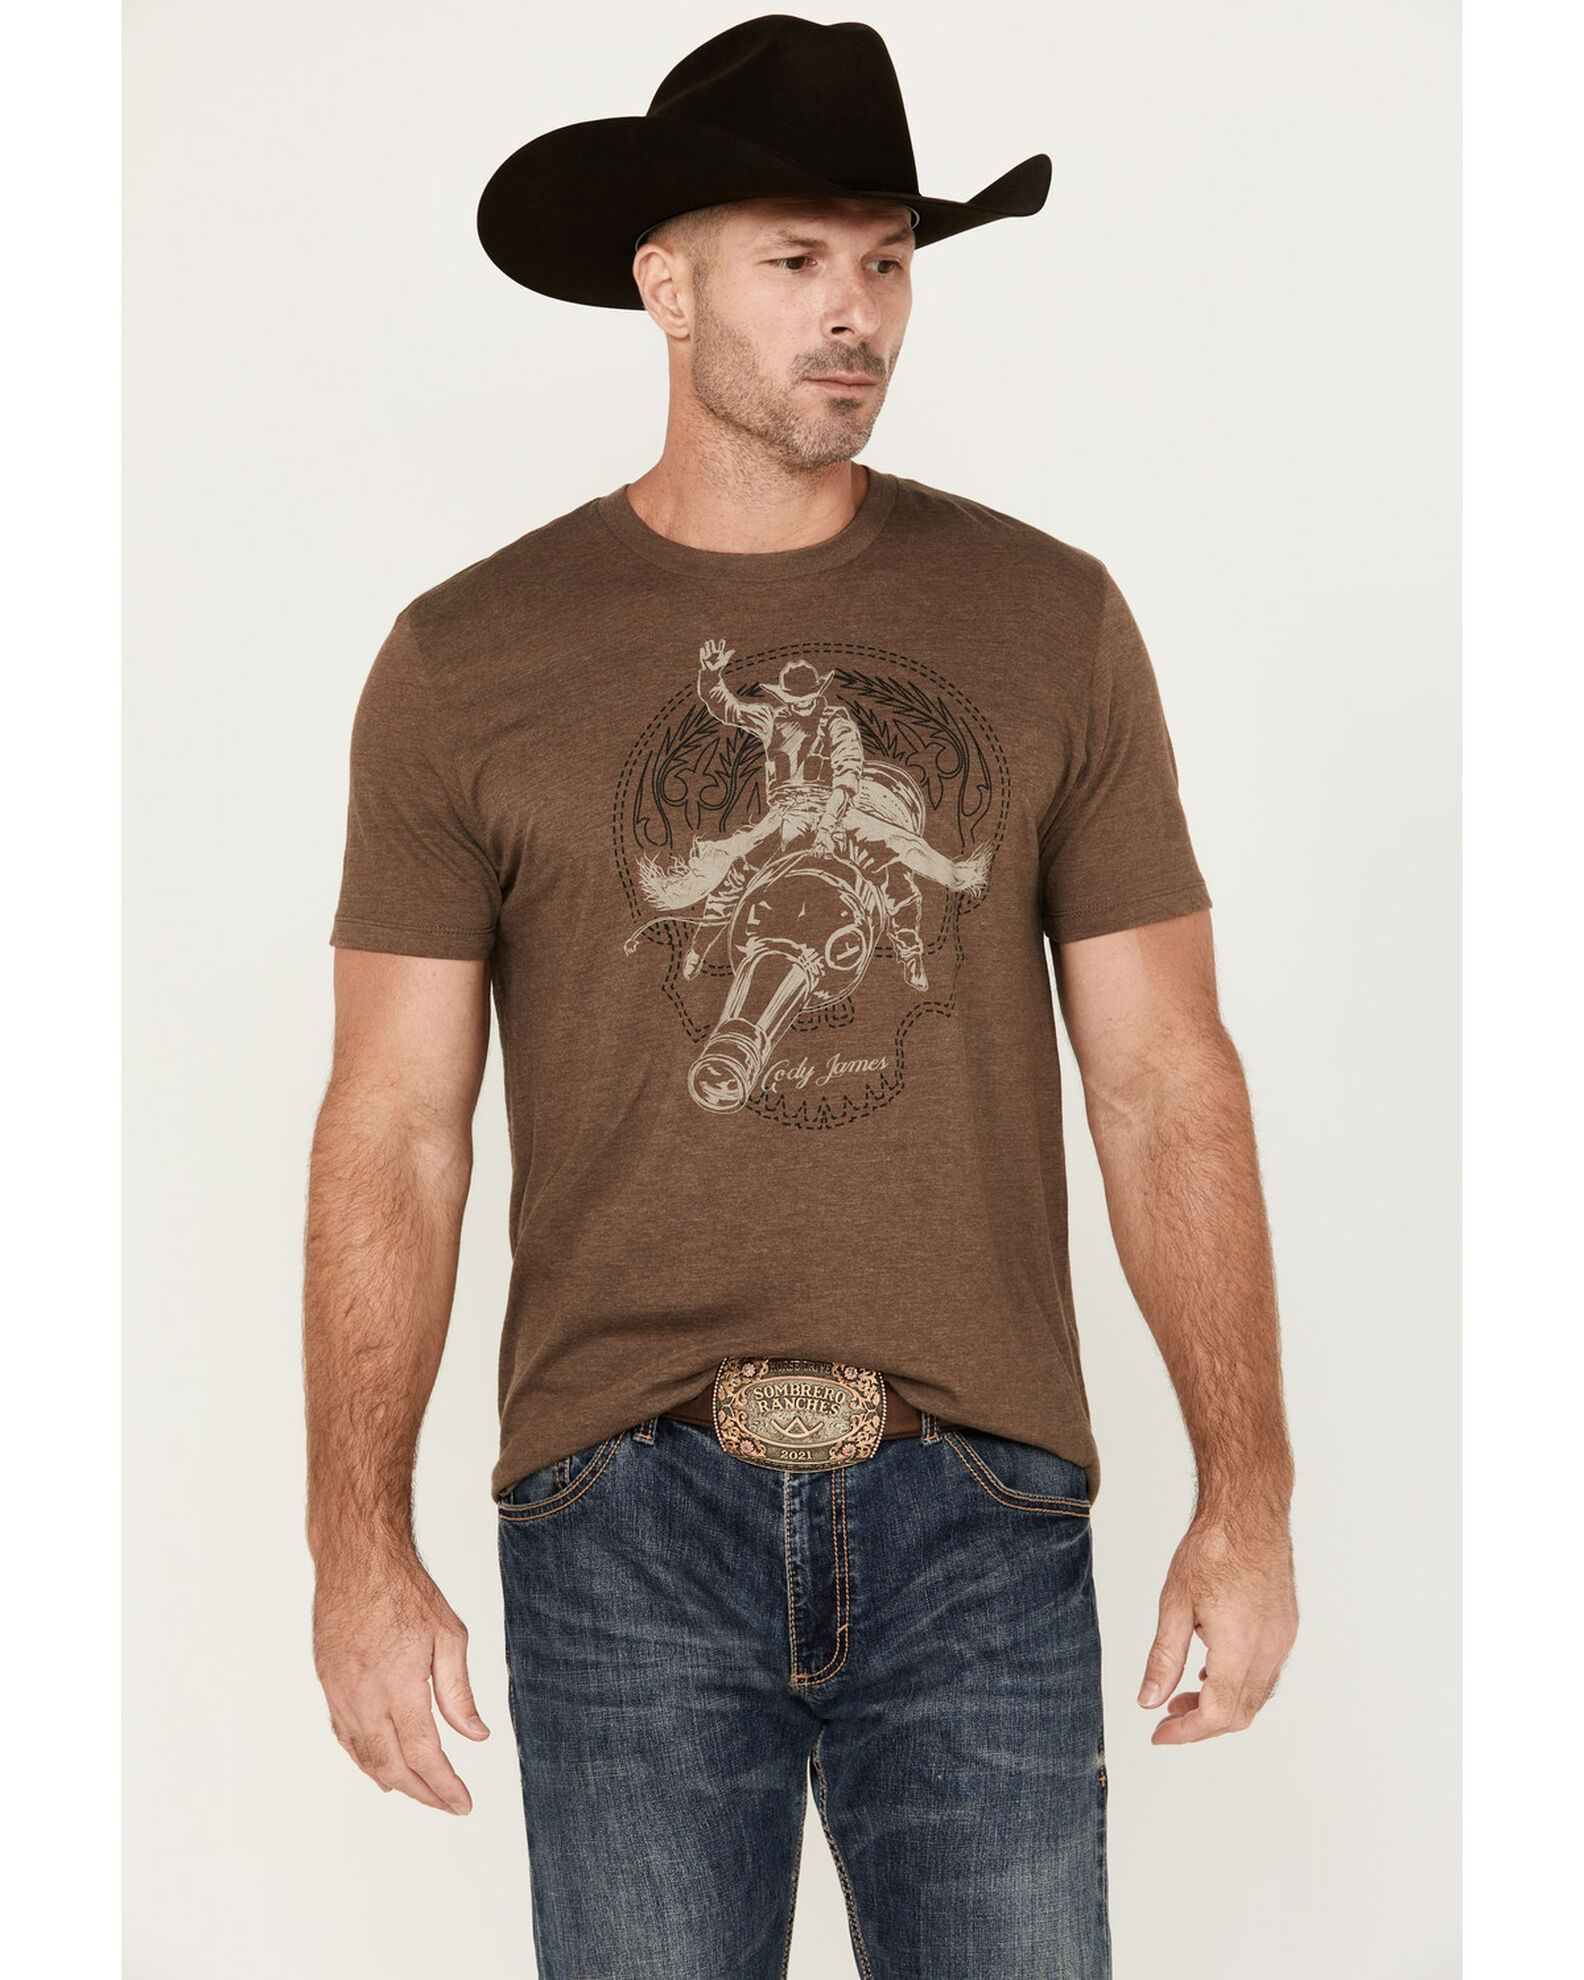 Cody James Men's Rodeo Bottle Short Sleeve Graphic T-Shirt